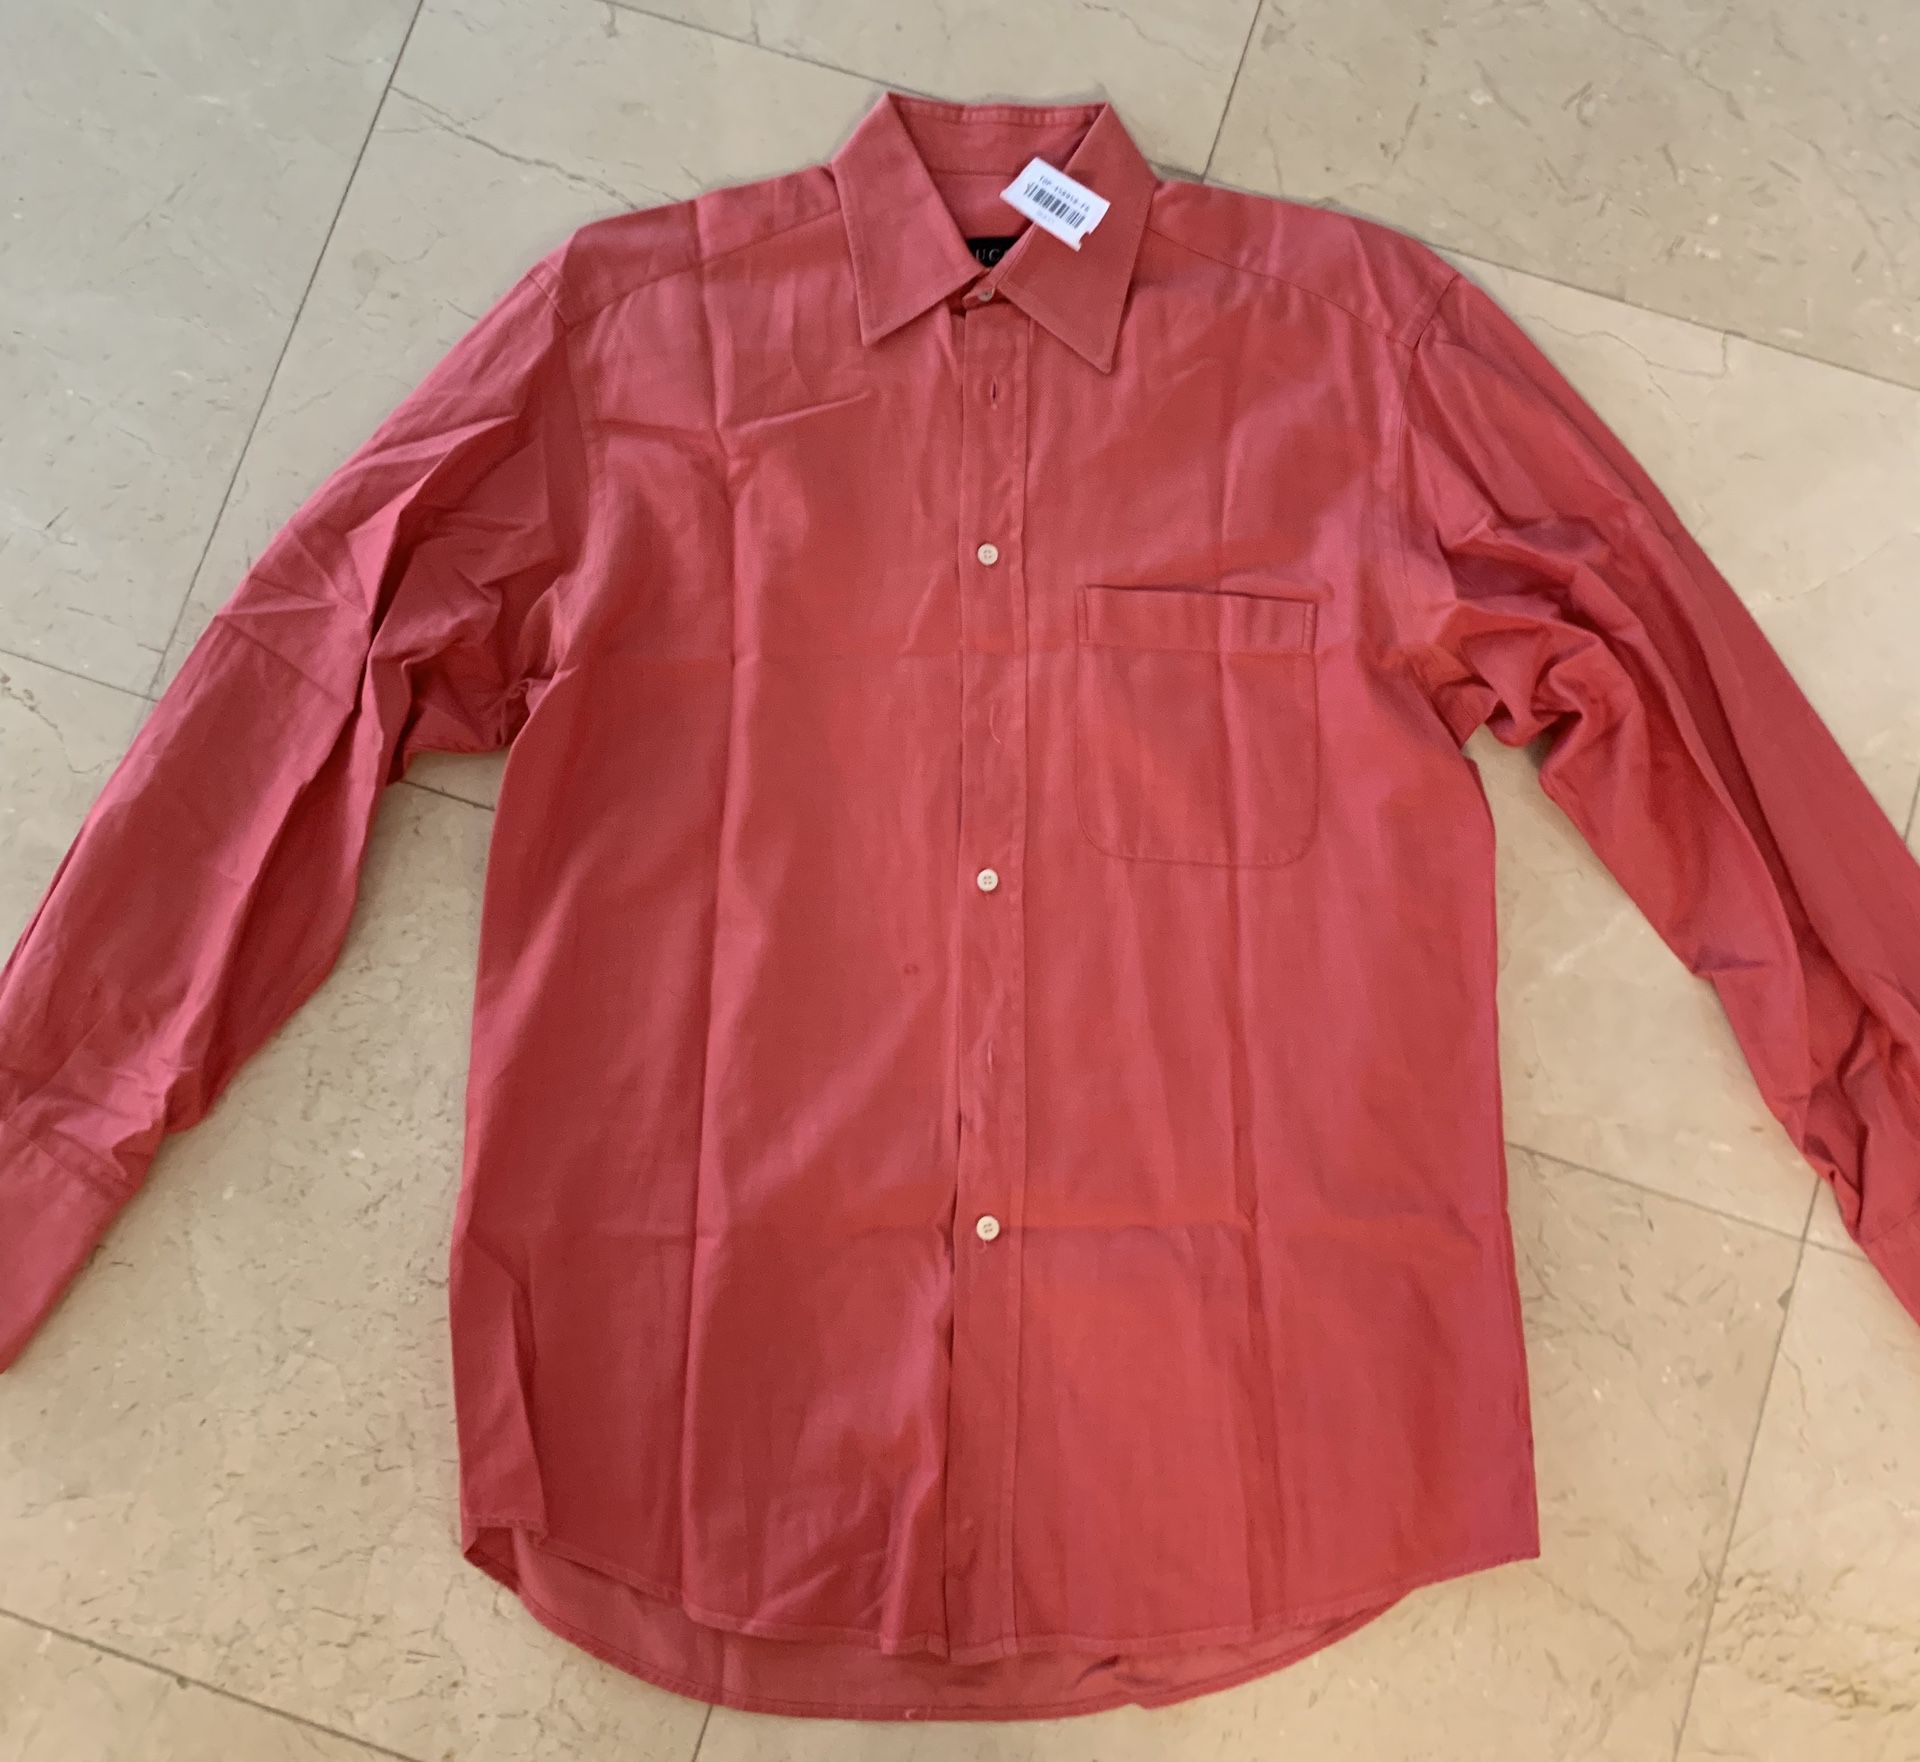 Gucci Men Dress button up shirt - pink red salmon size L large